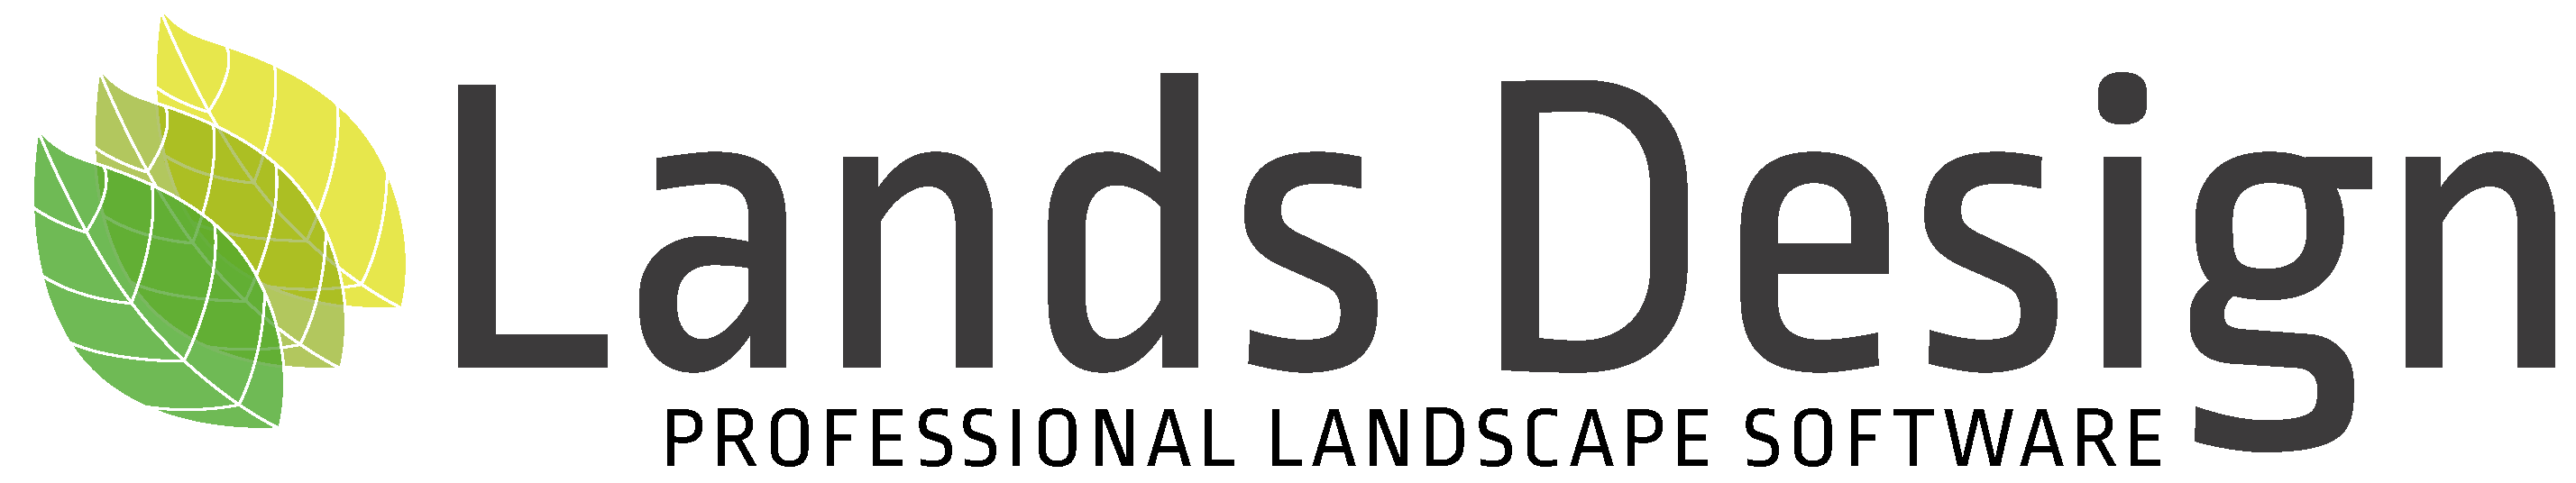 landsdesign logo